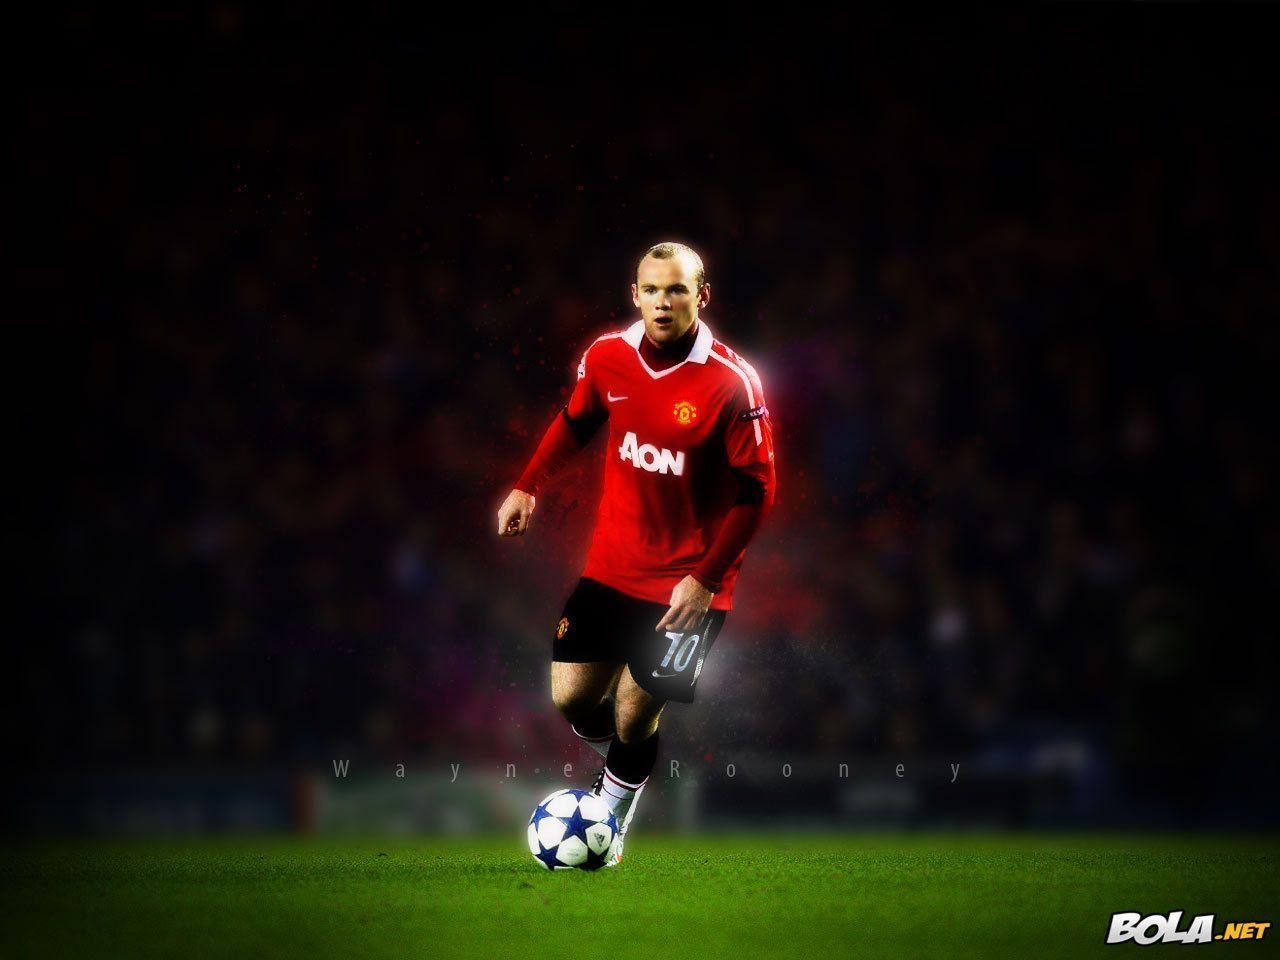 Wayne Rooney 2013 Wayne Rooney Wallpaper Football